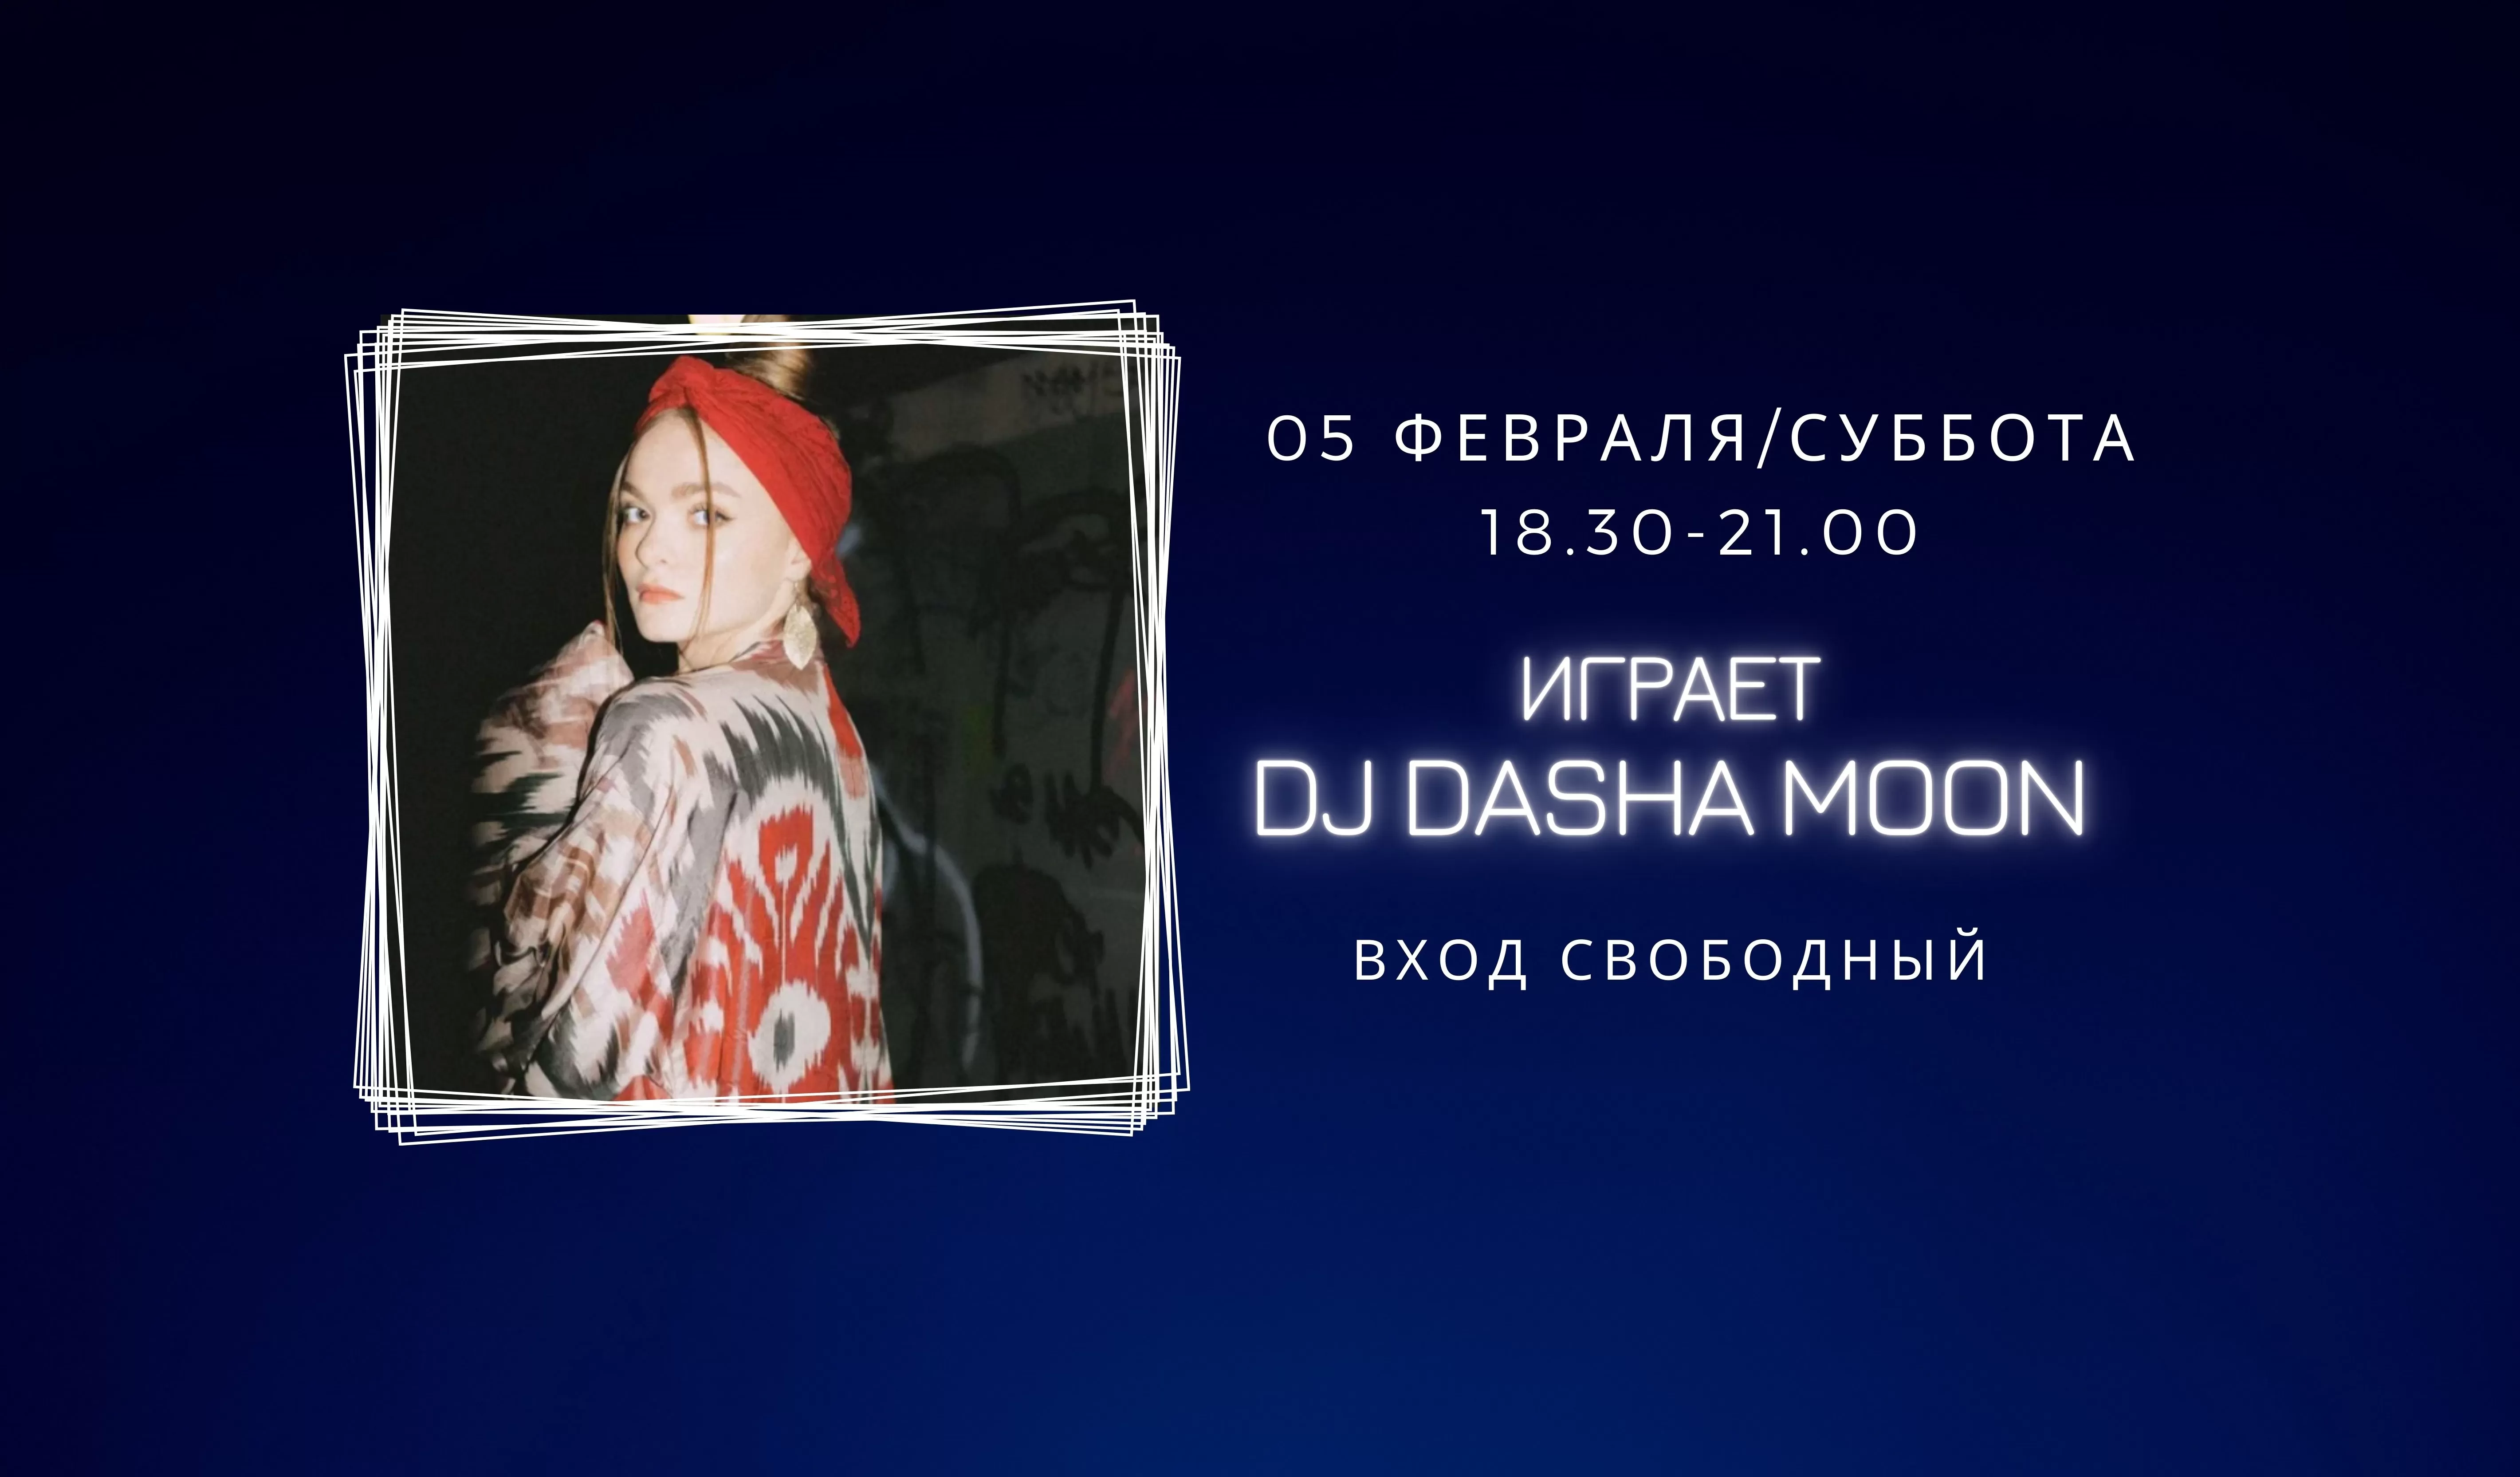 На сцене DJ Dasha moon